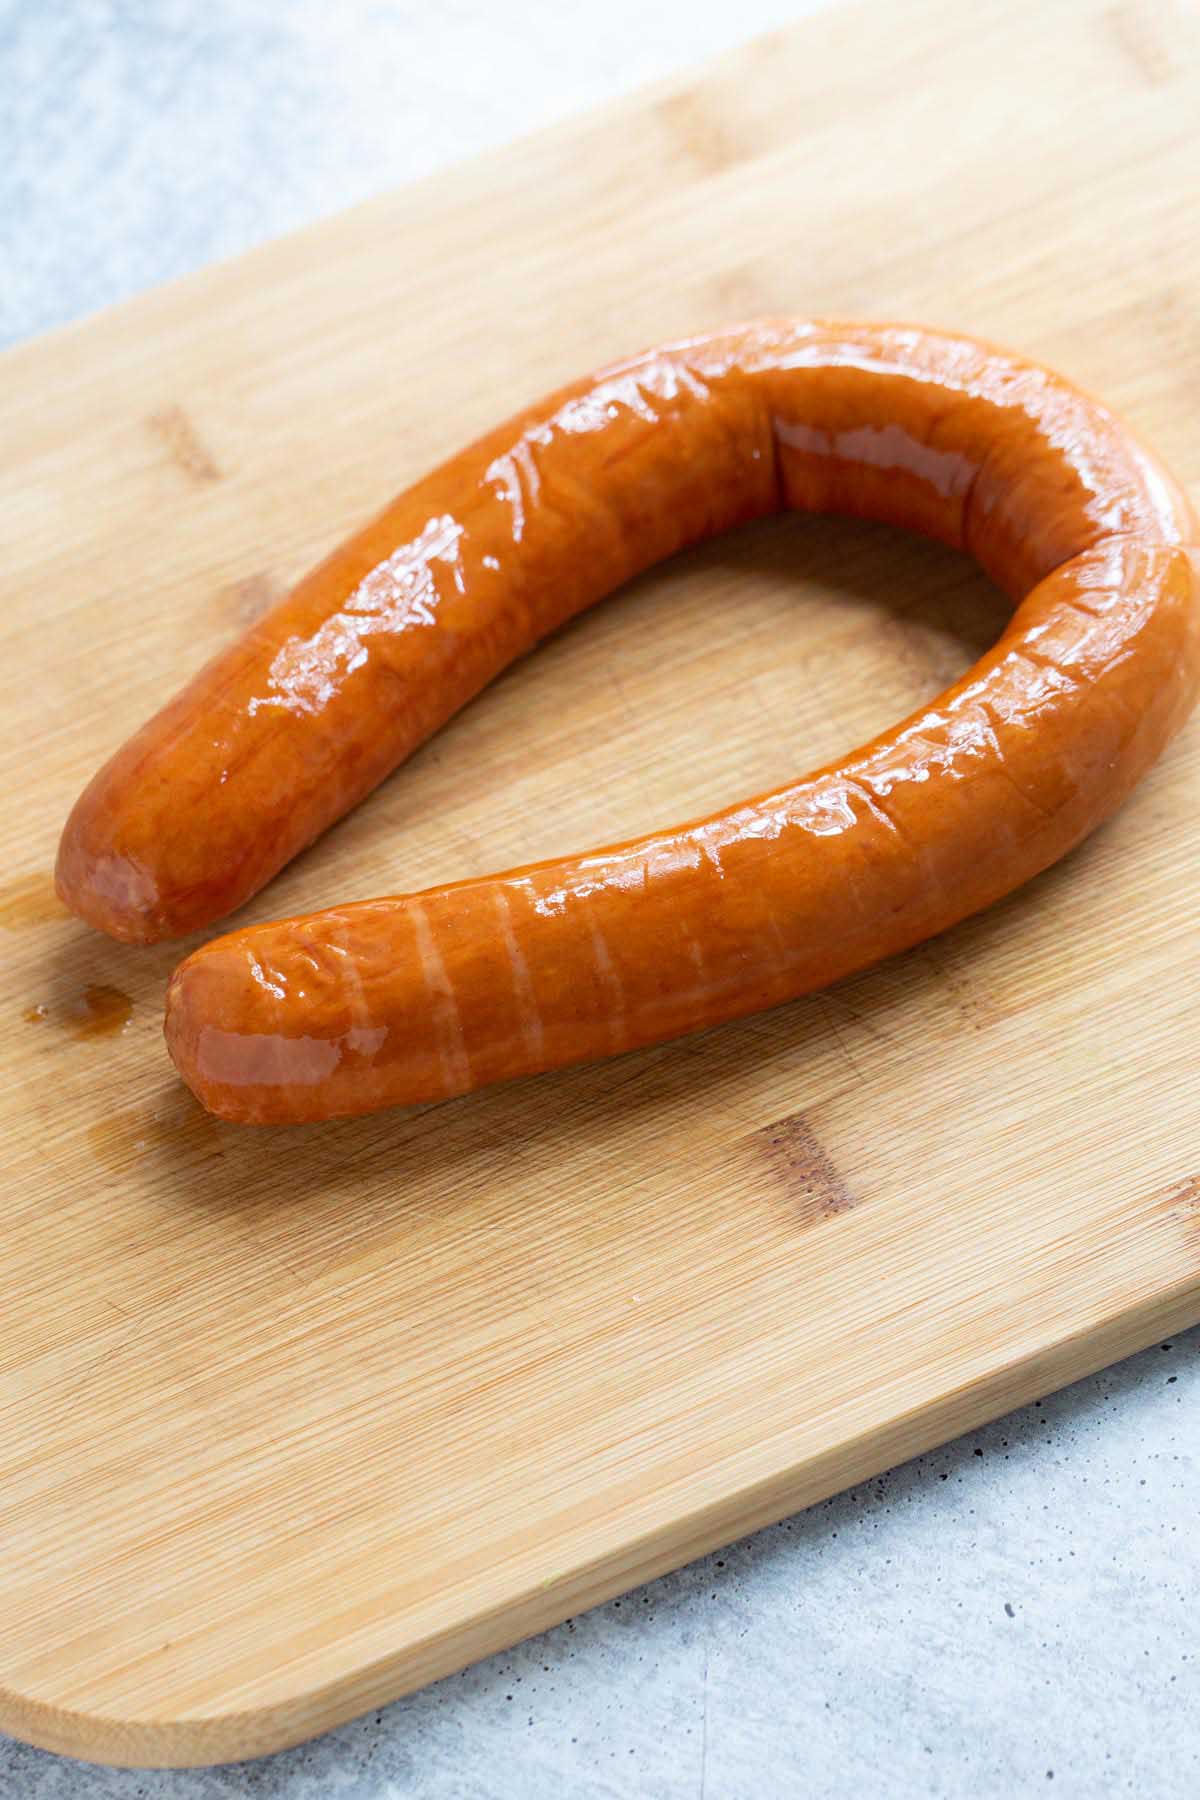 Kielbasa Polish sausage.